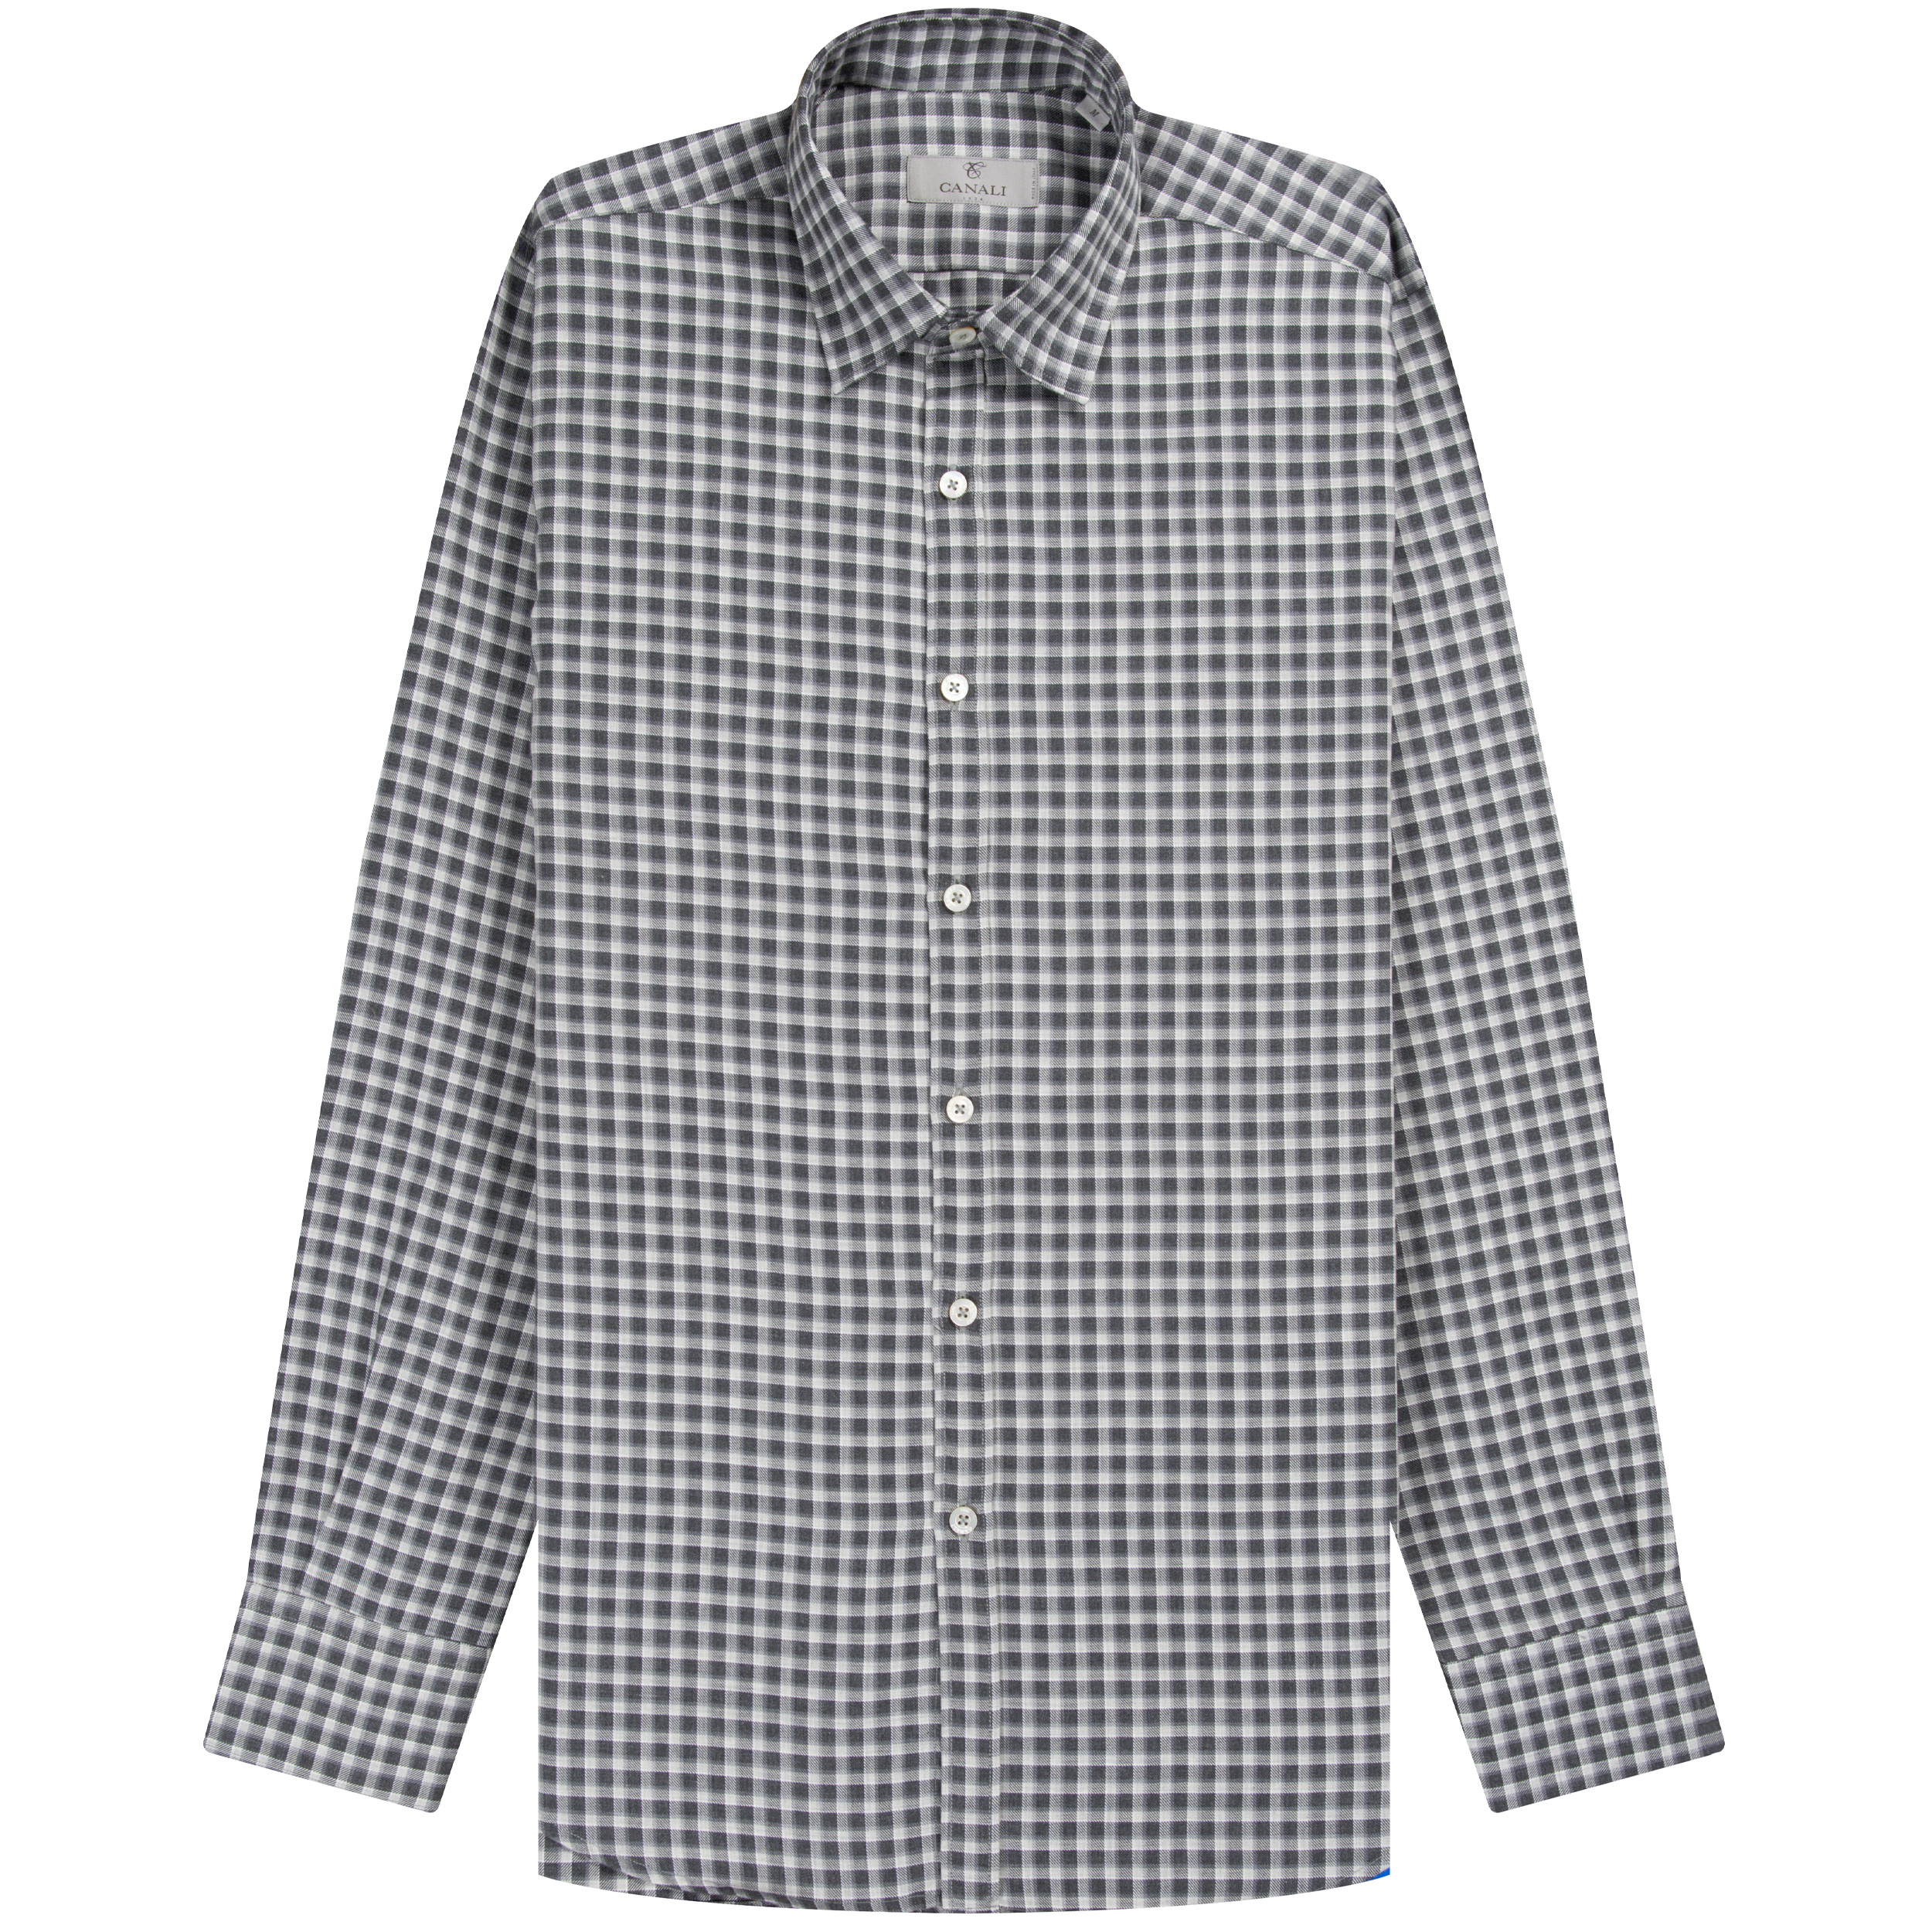 Canali Luxury Flannel Check Shirt Grey